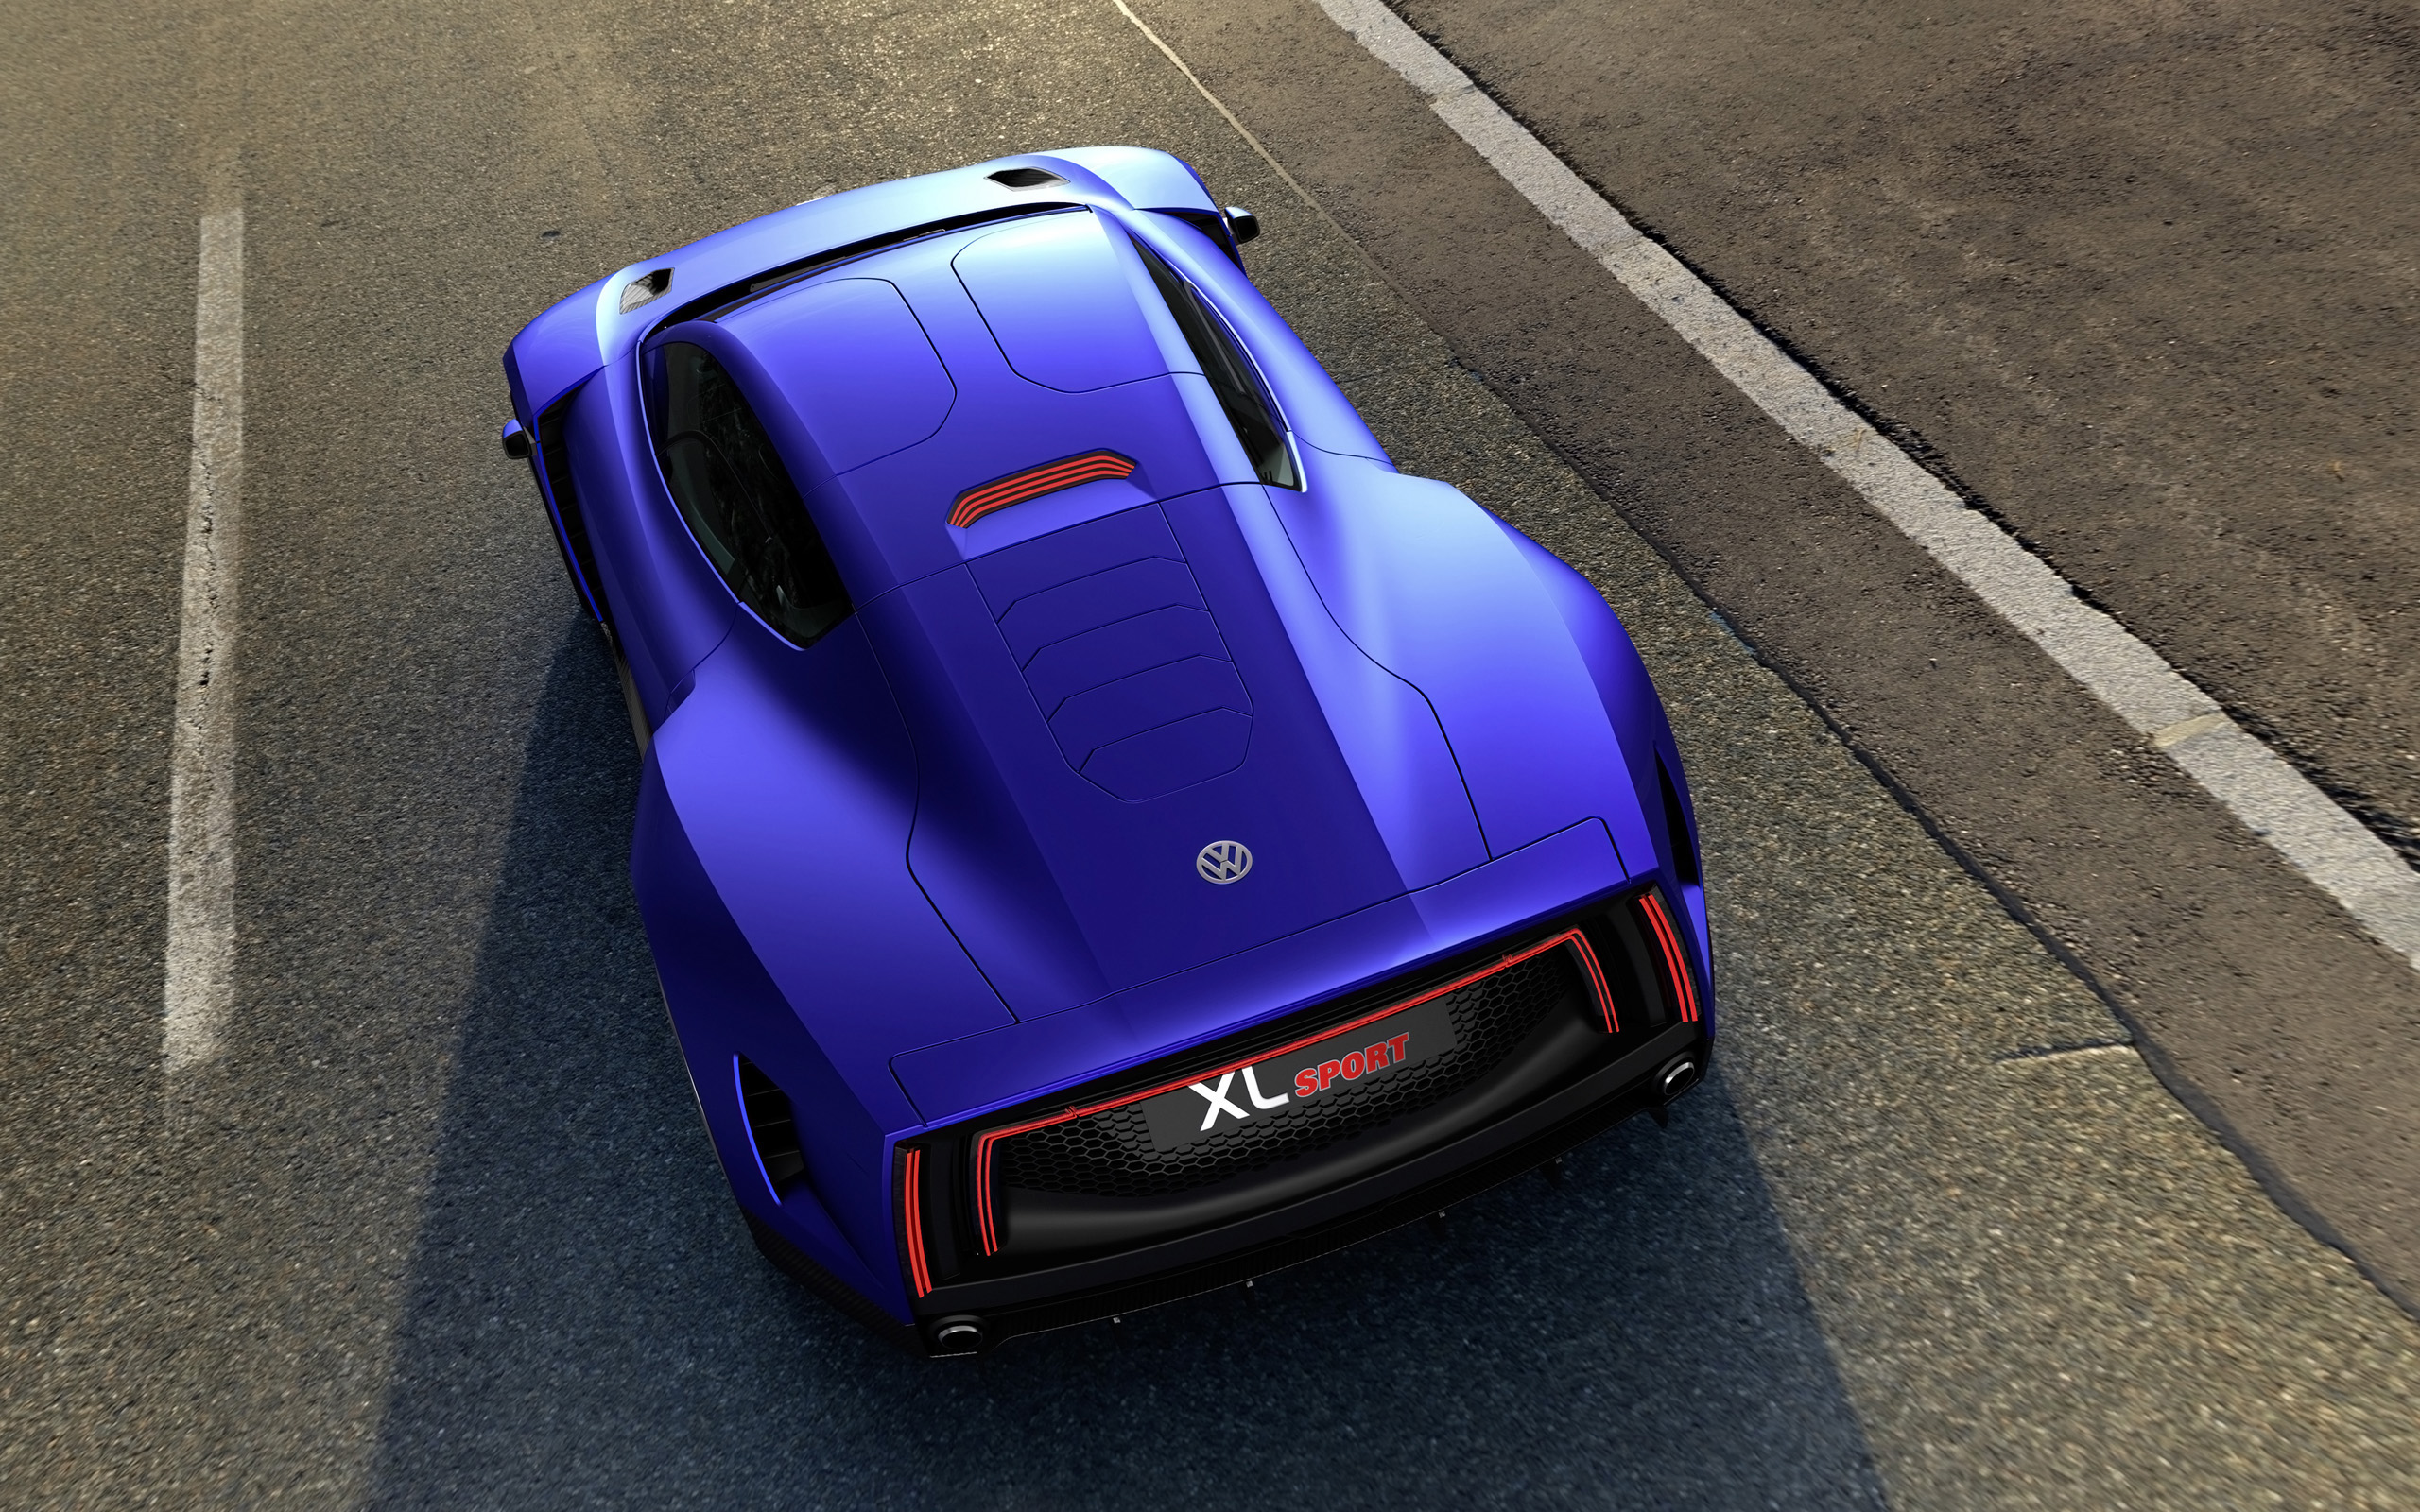 2014 Volkswagen XL Sport Concept 5 Wallpaper | HD Car Wallpapers | ID #4878
